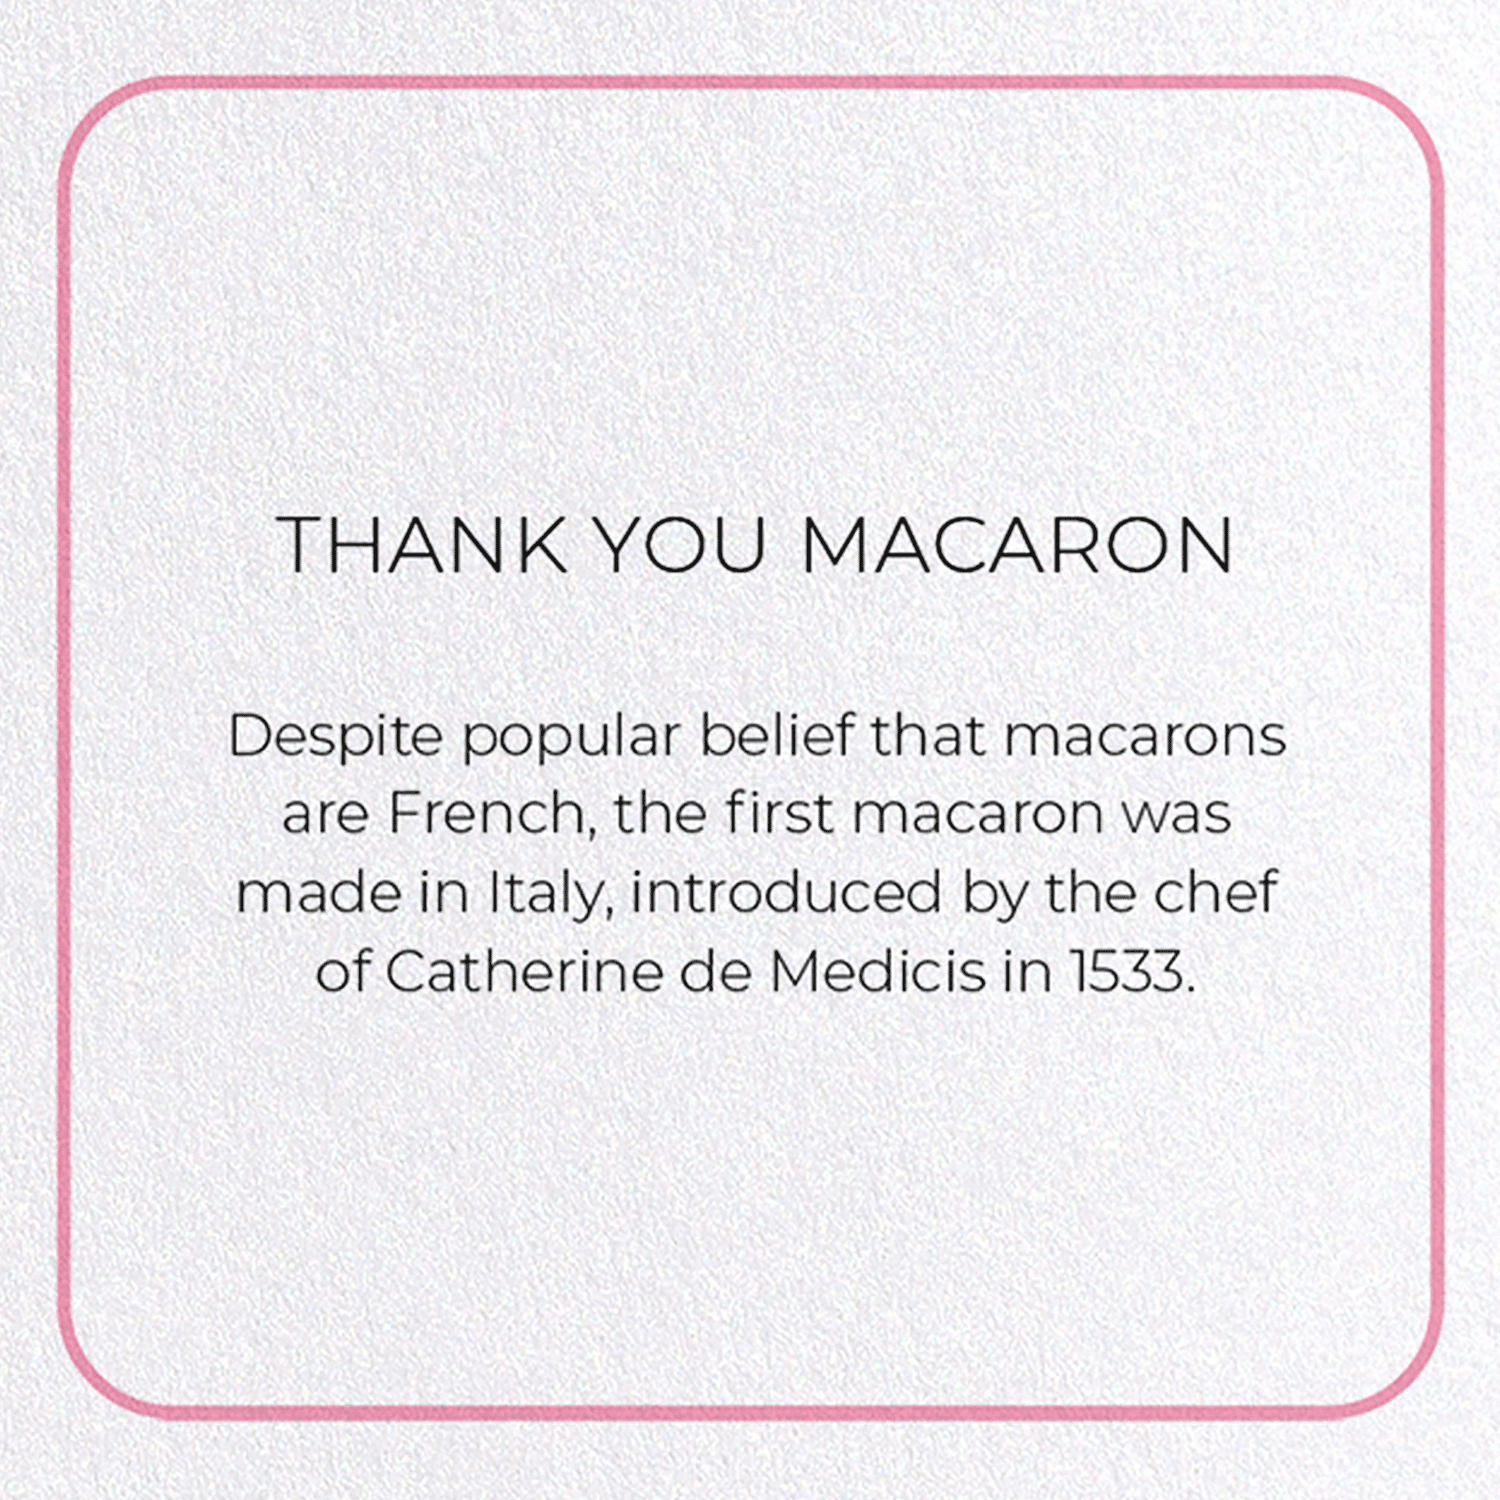 THANK YOU MACARON